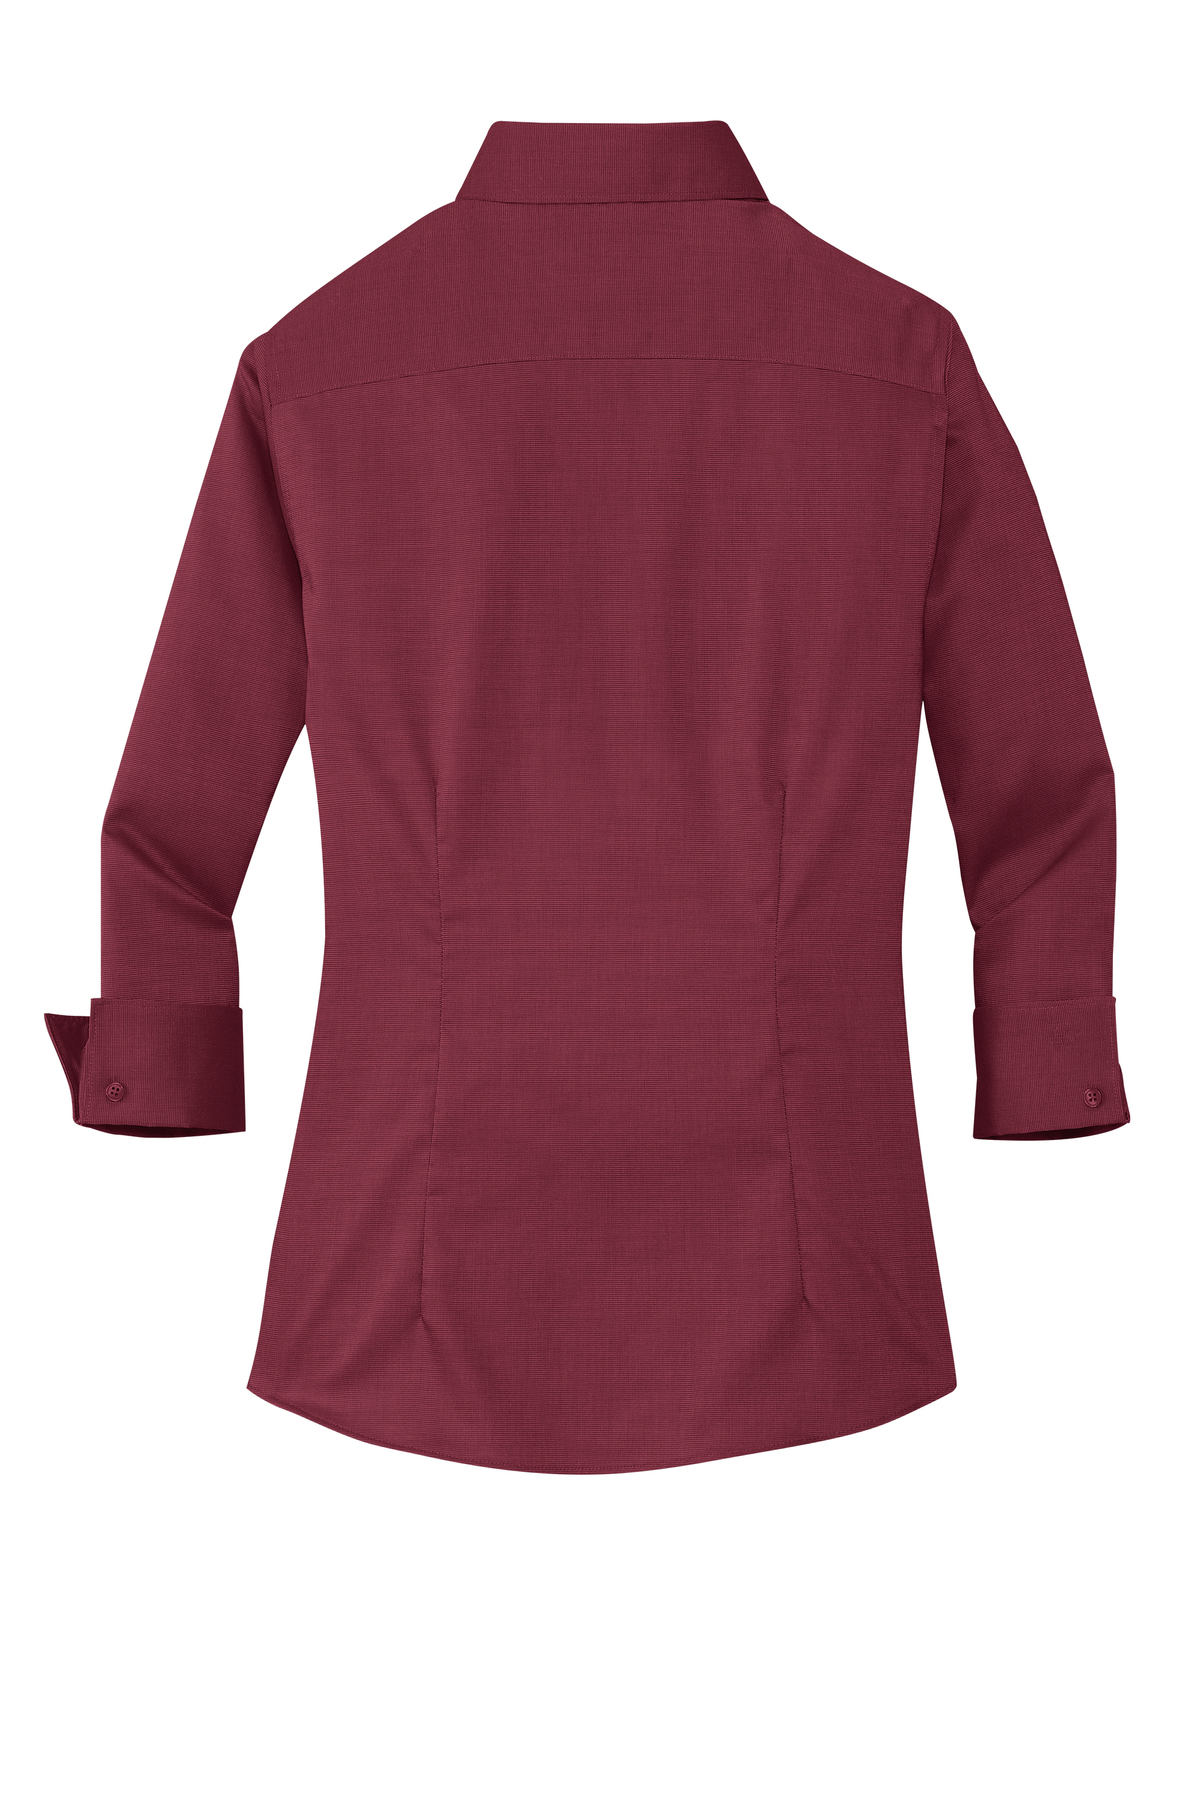 Red House | Non-Iron Product 3/4-Sleeve SanMar | Ladies Nailhead Shirt